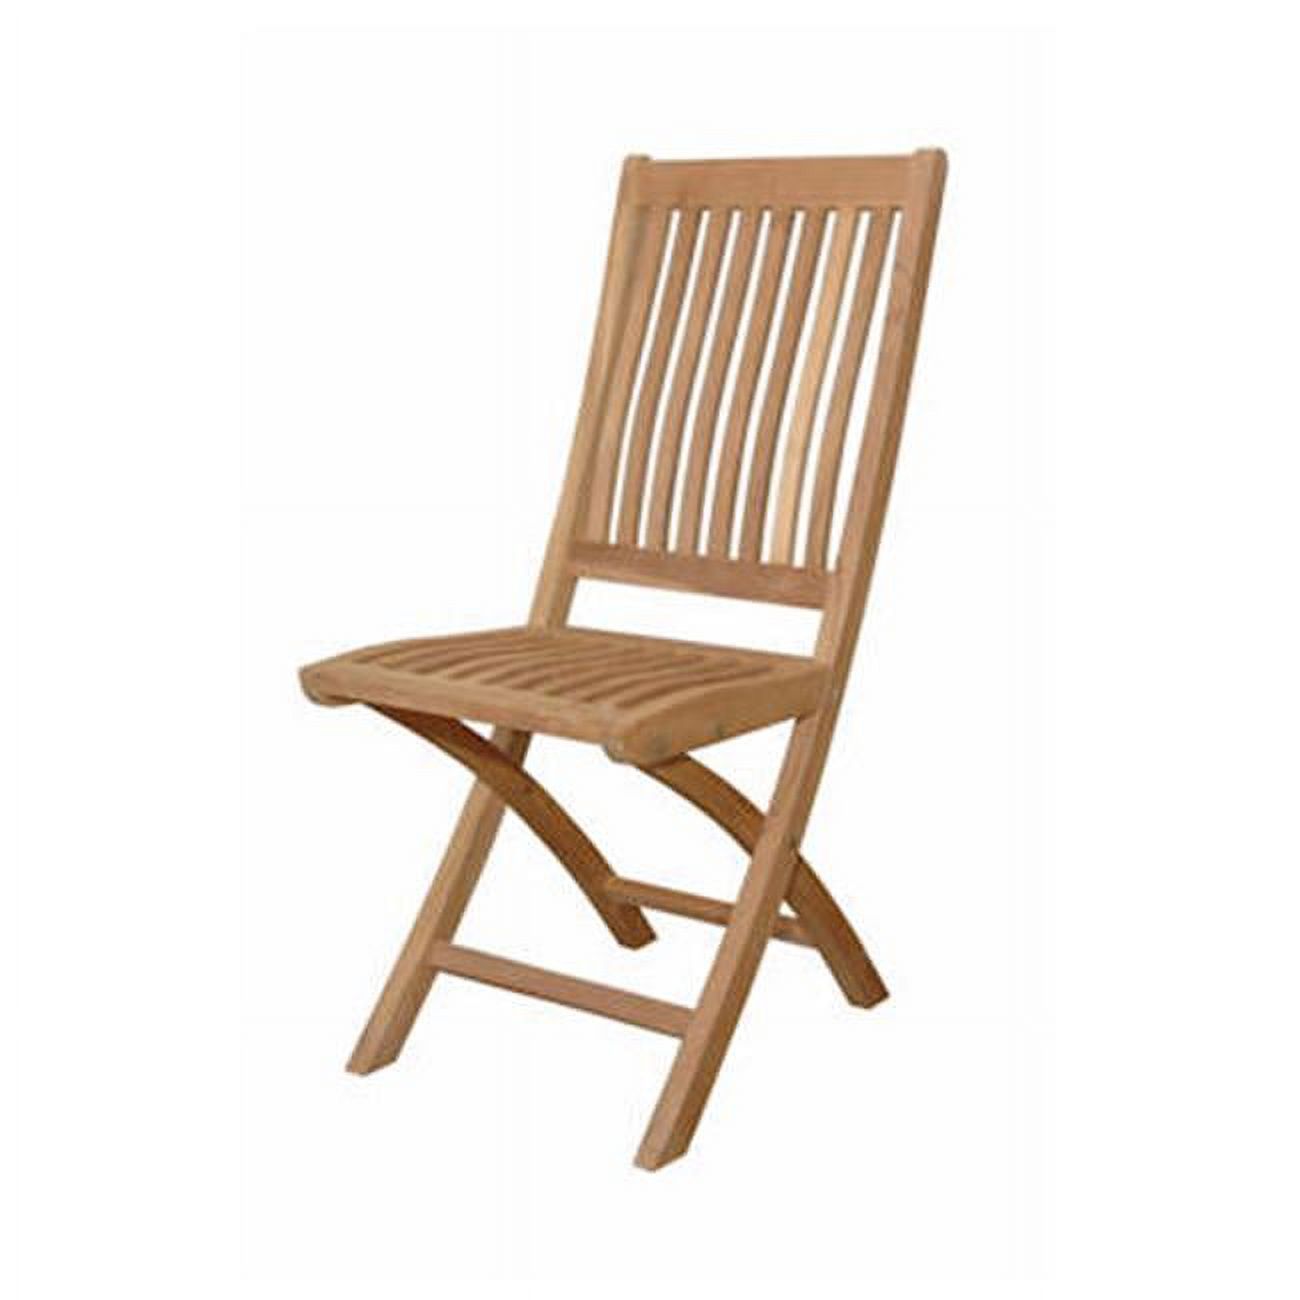 Anderson Teak Tropico Folding Chair - image 1 of 3